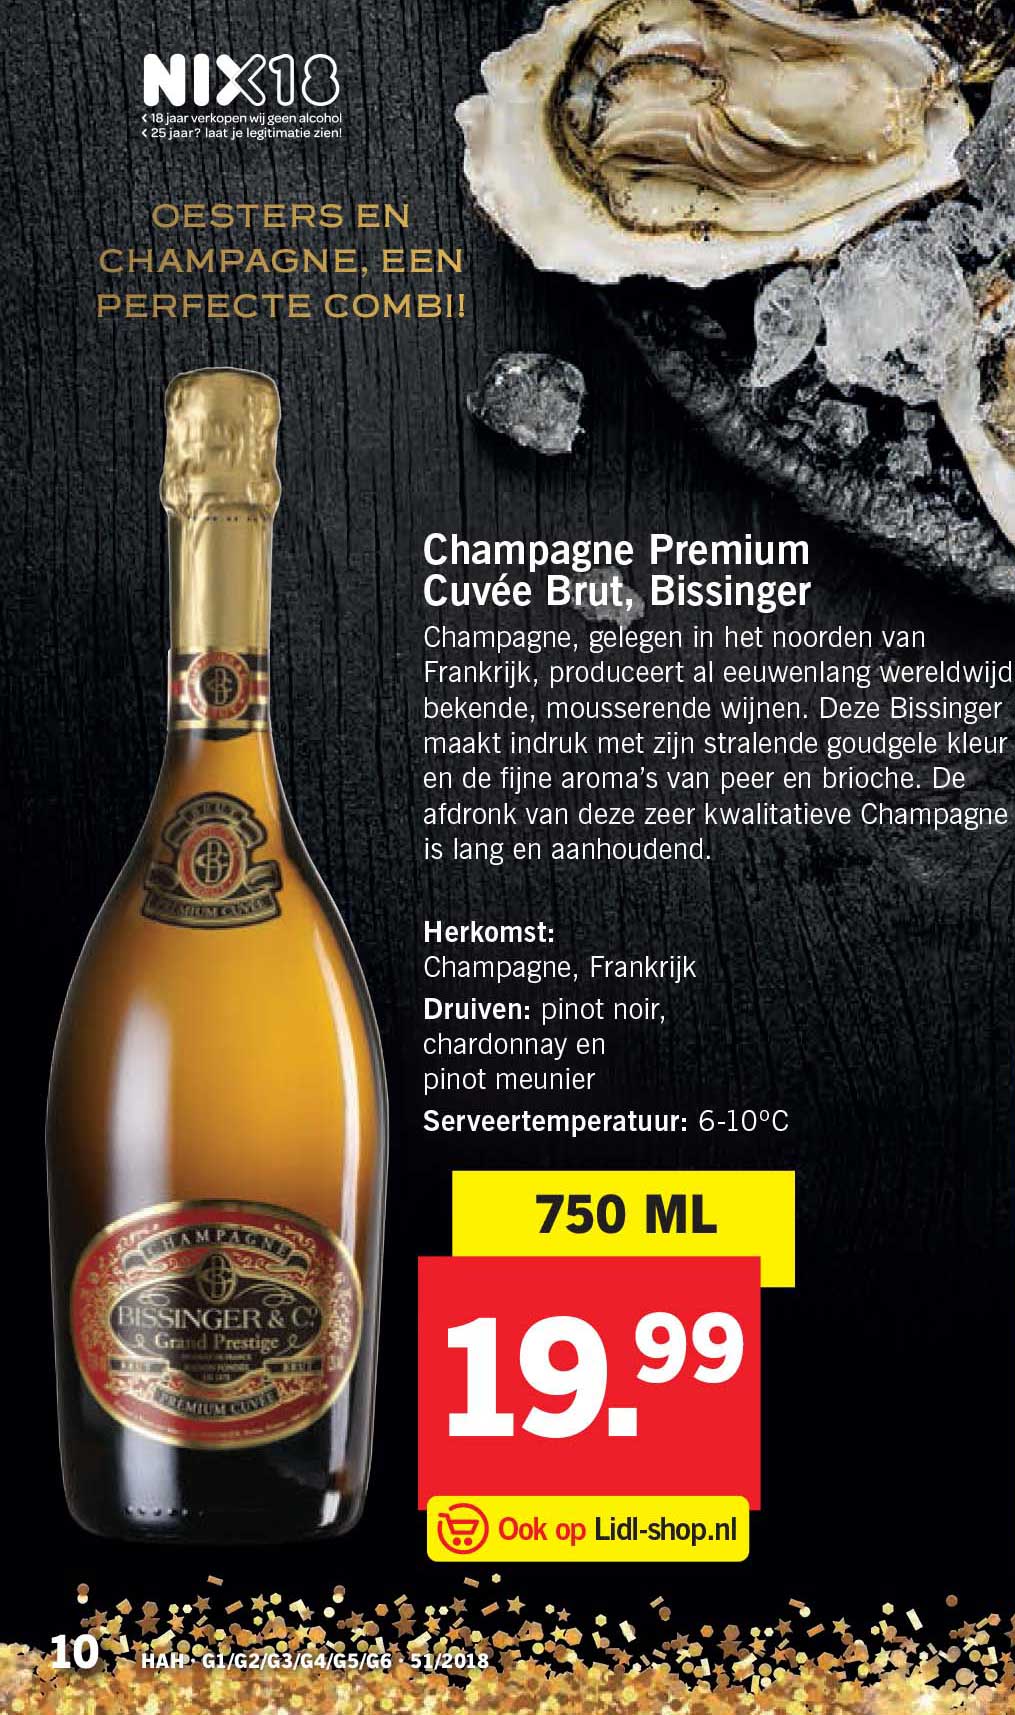 Champagne Premium Cuvee Brut, Bissinger Aanbieding bij Lidl